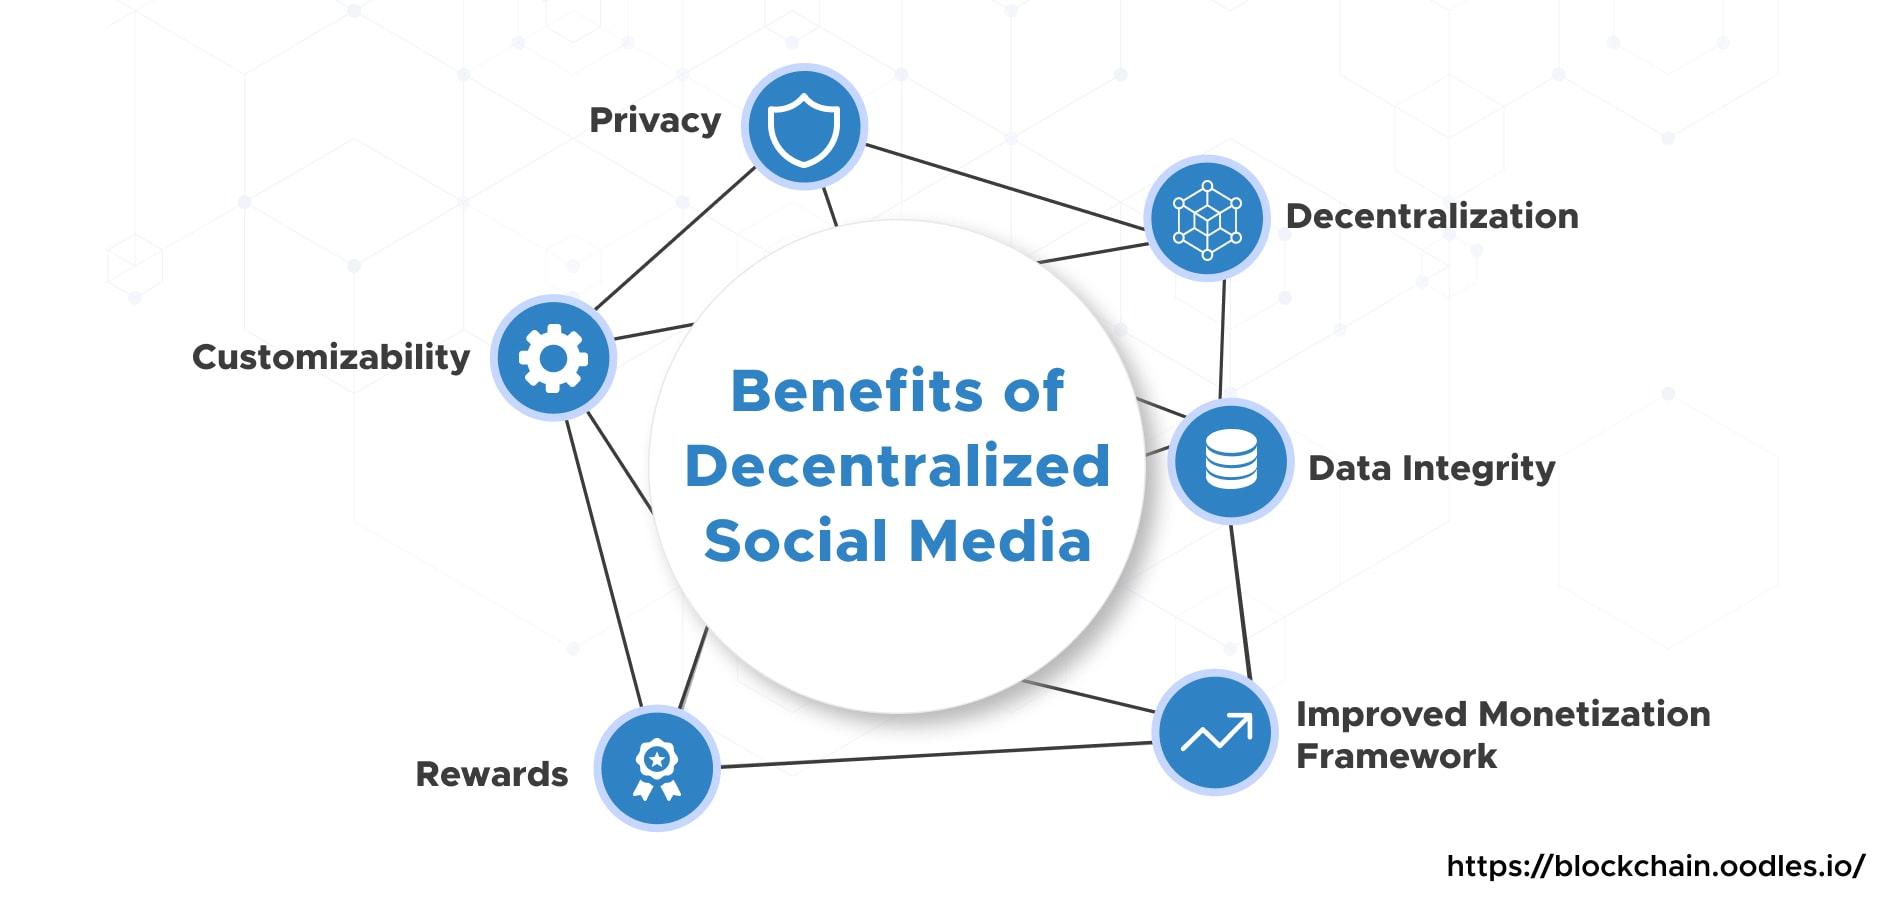 Benefits of Decentralized Social Media